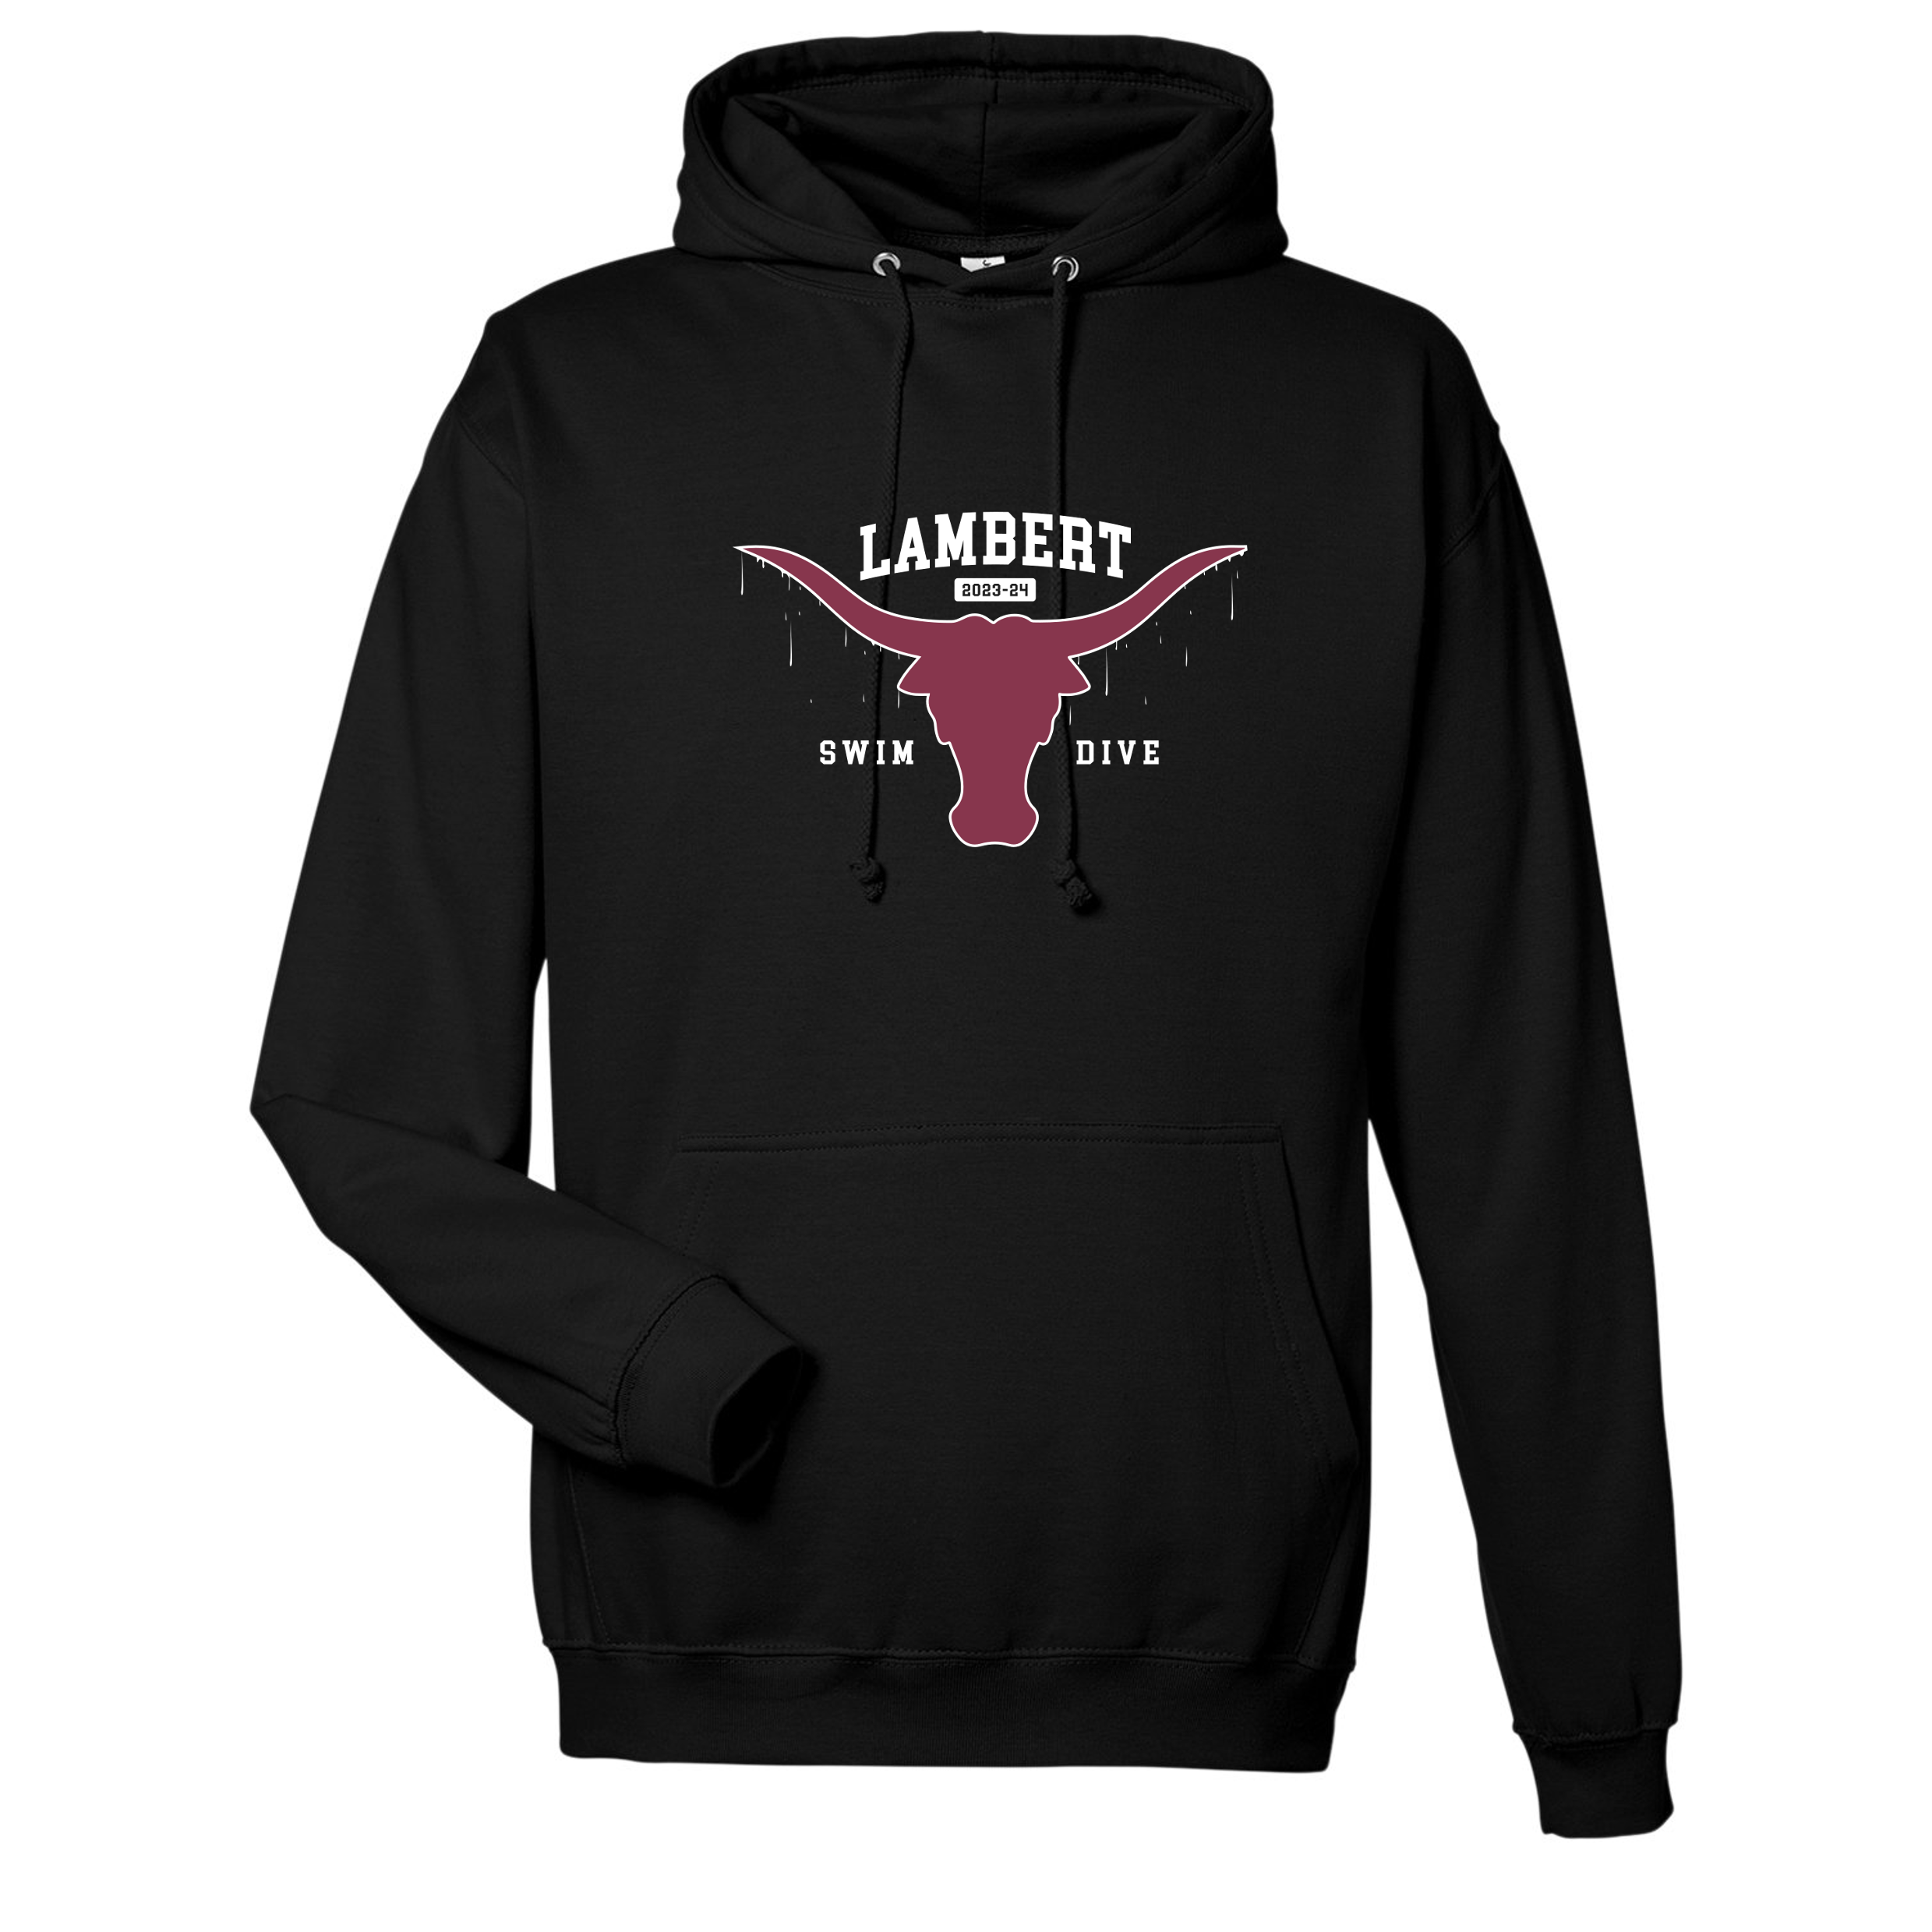 Unisex Hooded Sweatshirt Design #2 - Lambert